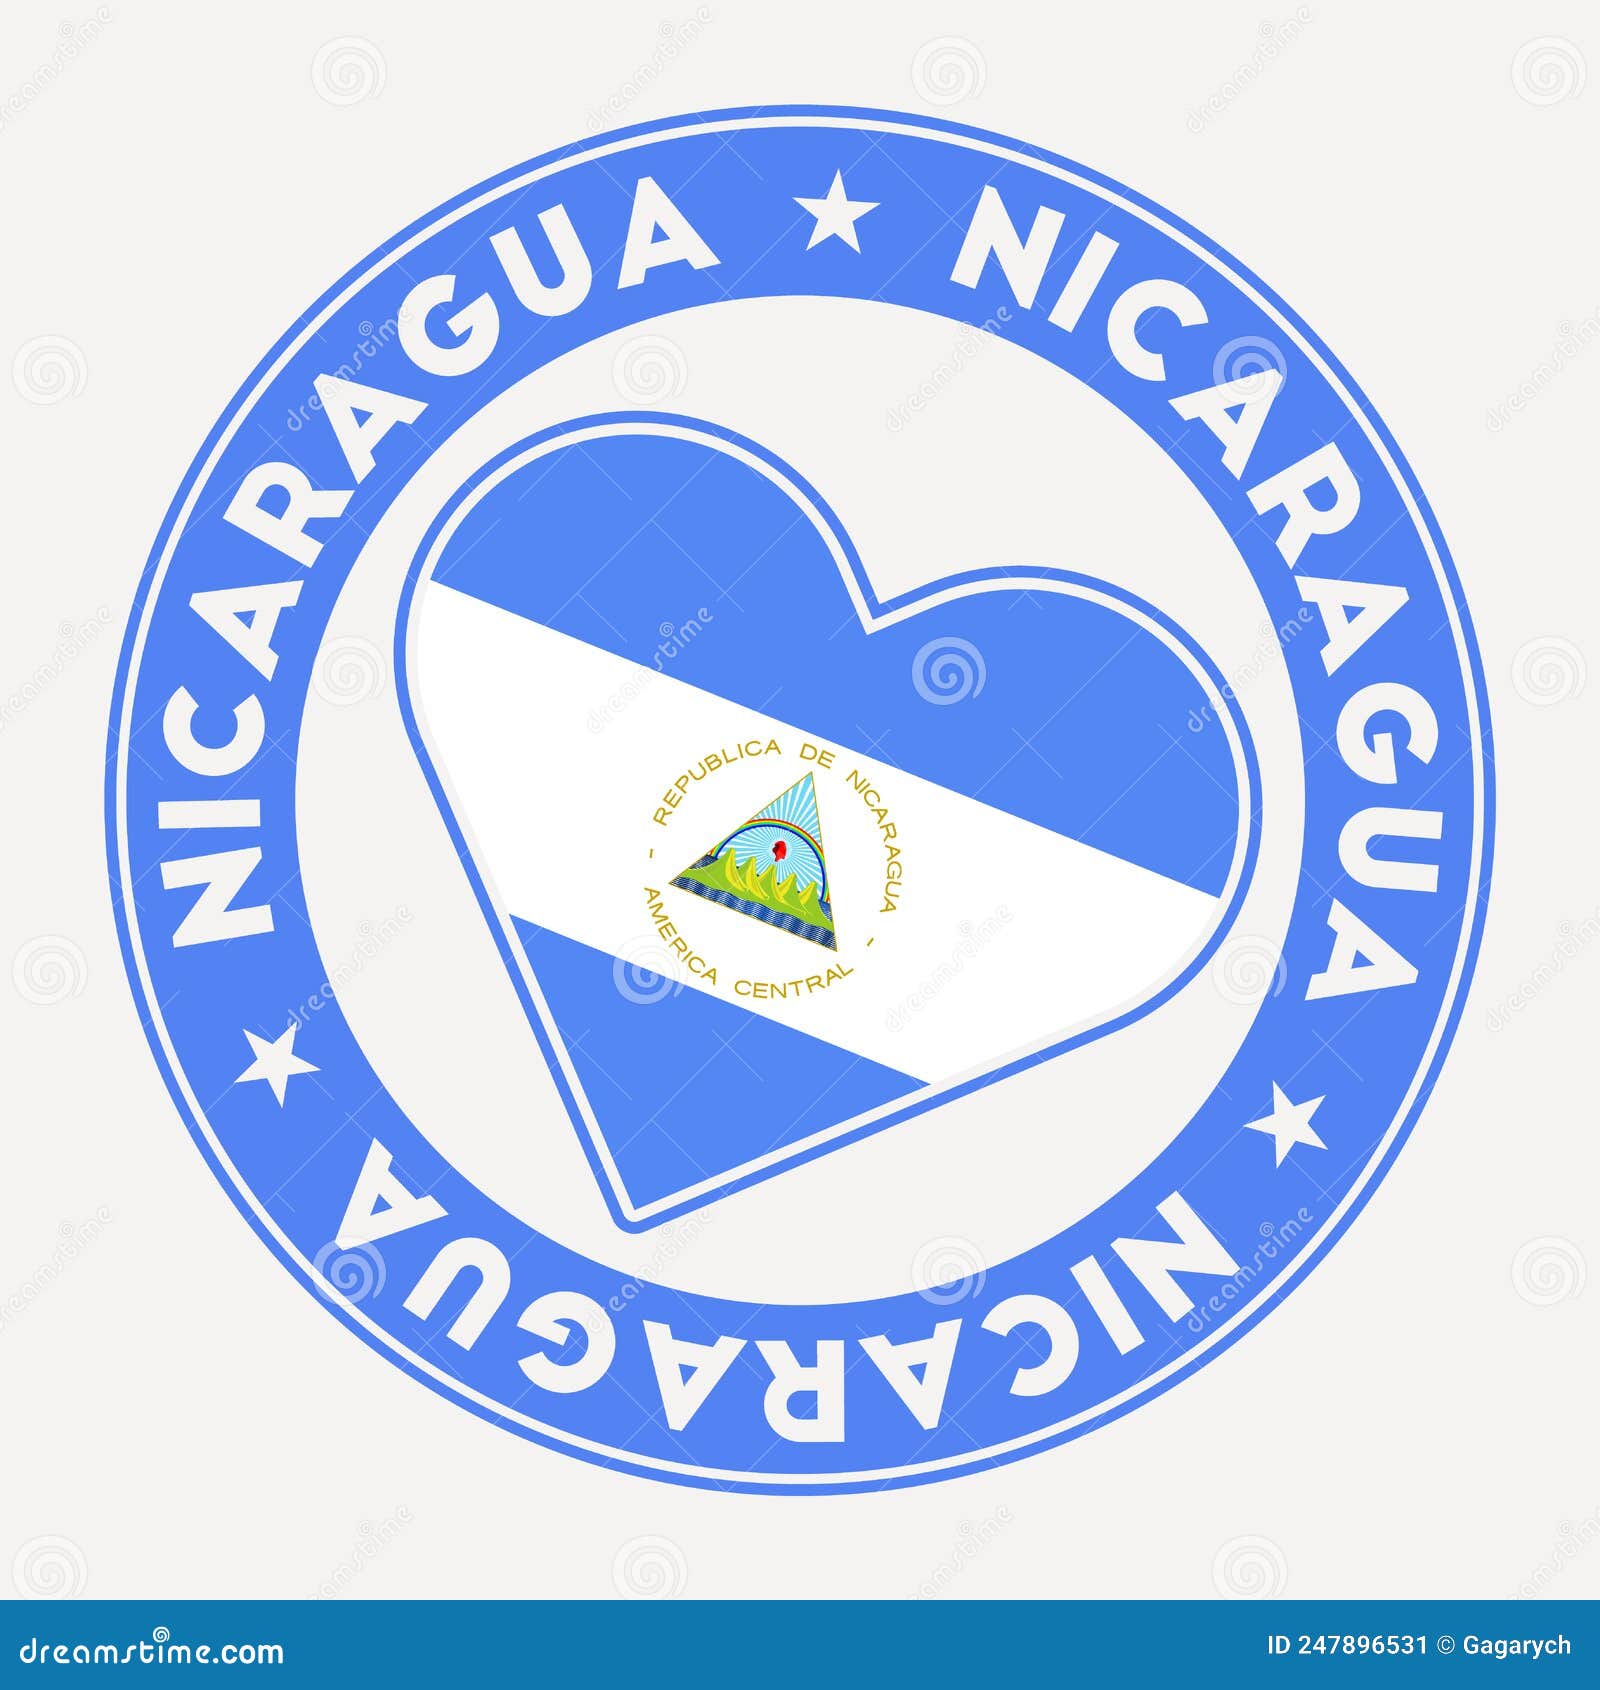 nicaragua heart flag badge.